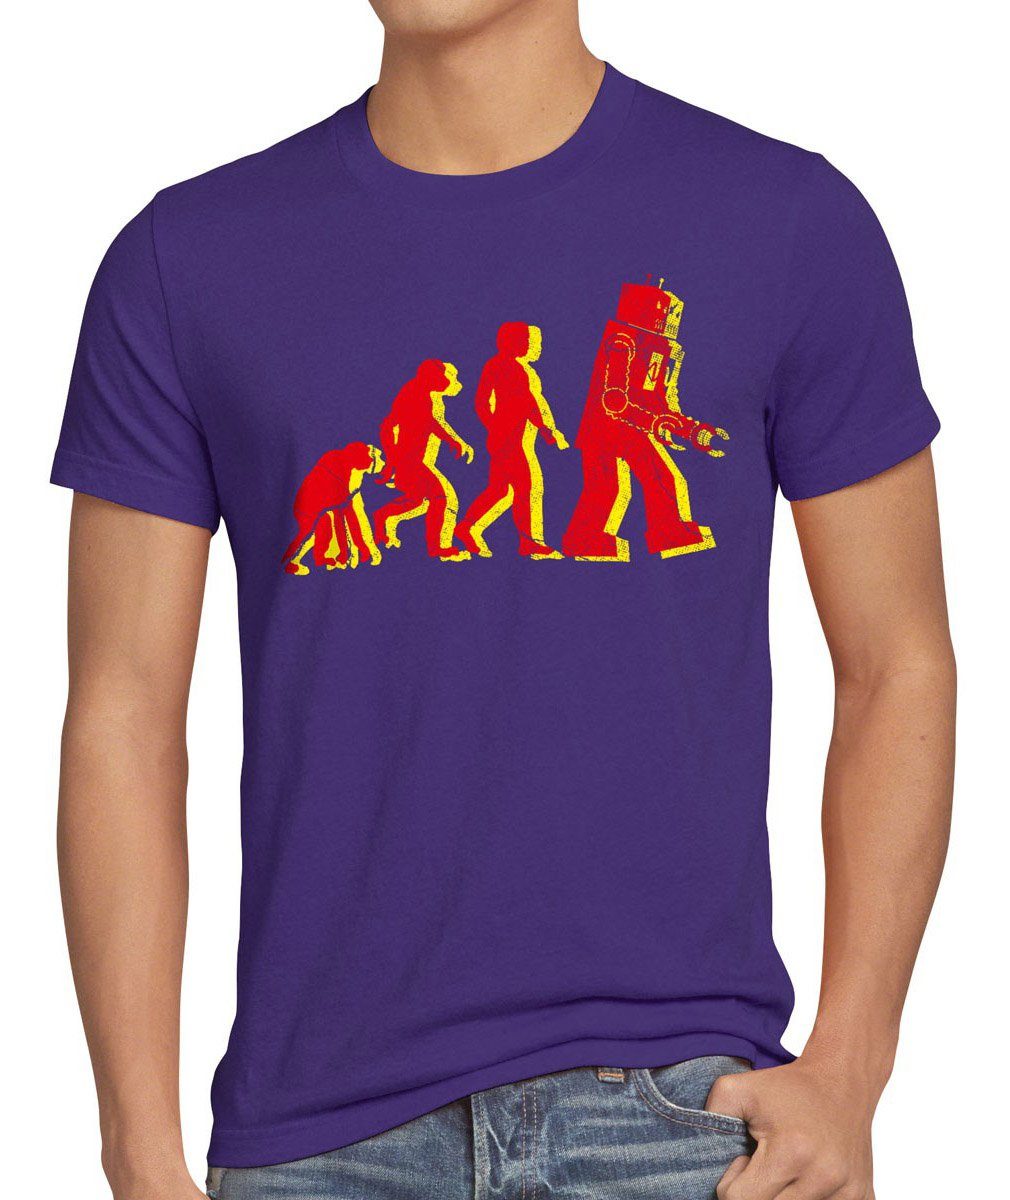 style3 Print-Shirt Herren T-Shirt Evolution big bang roboter sheldon theory cooper darwin neu robot lila | T-Shirts